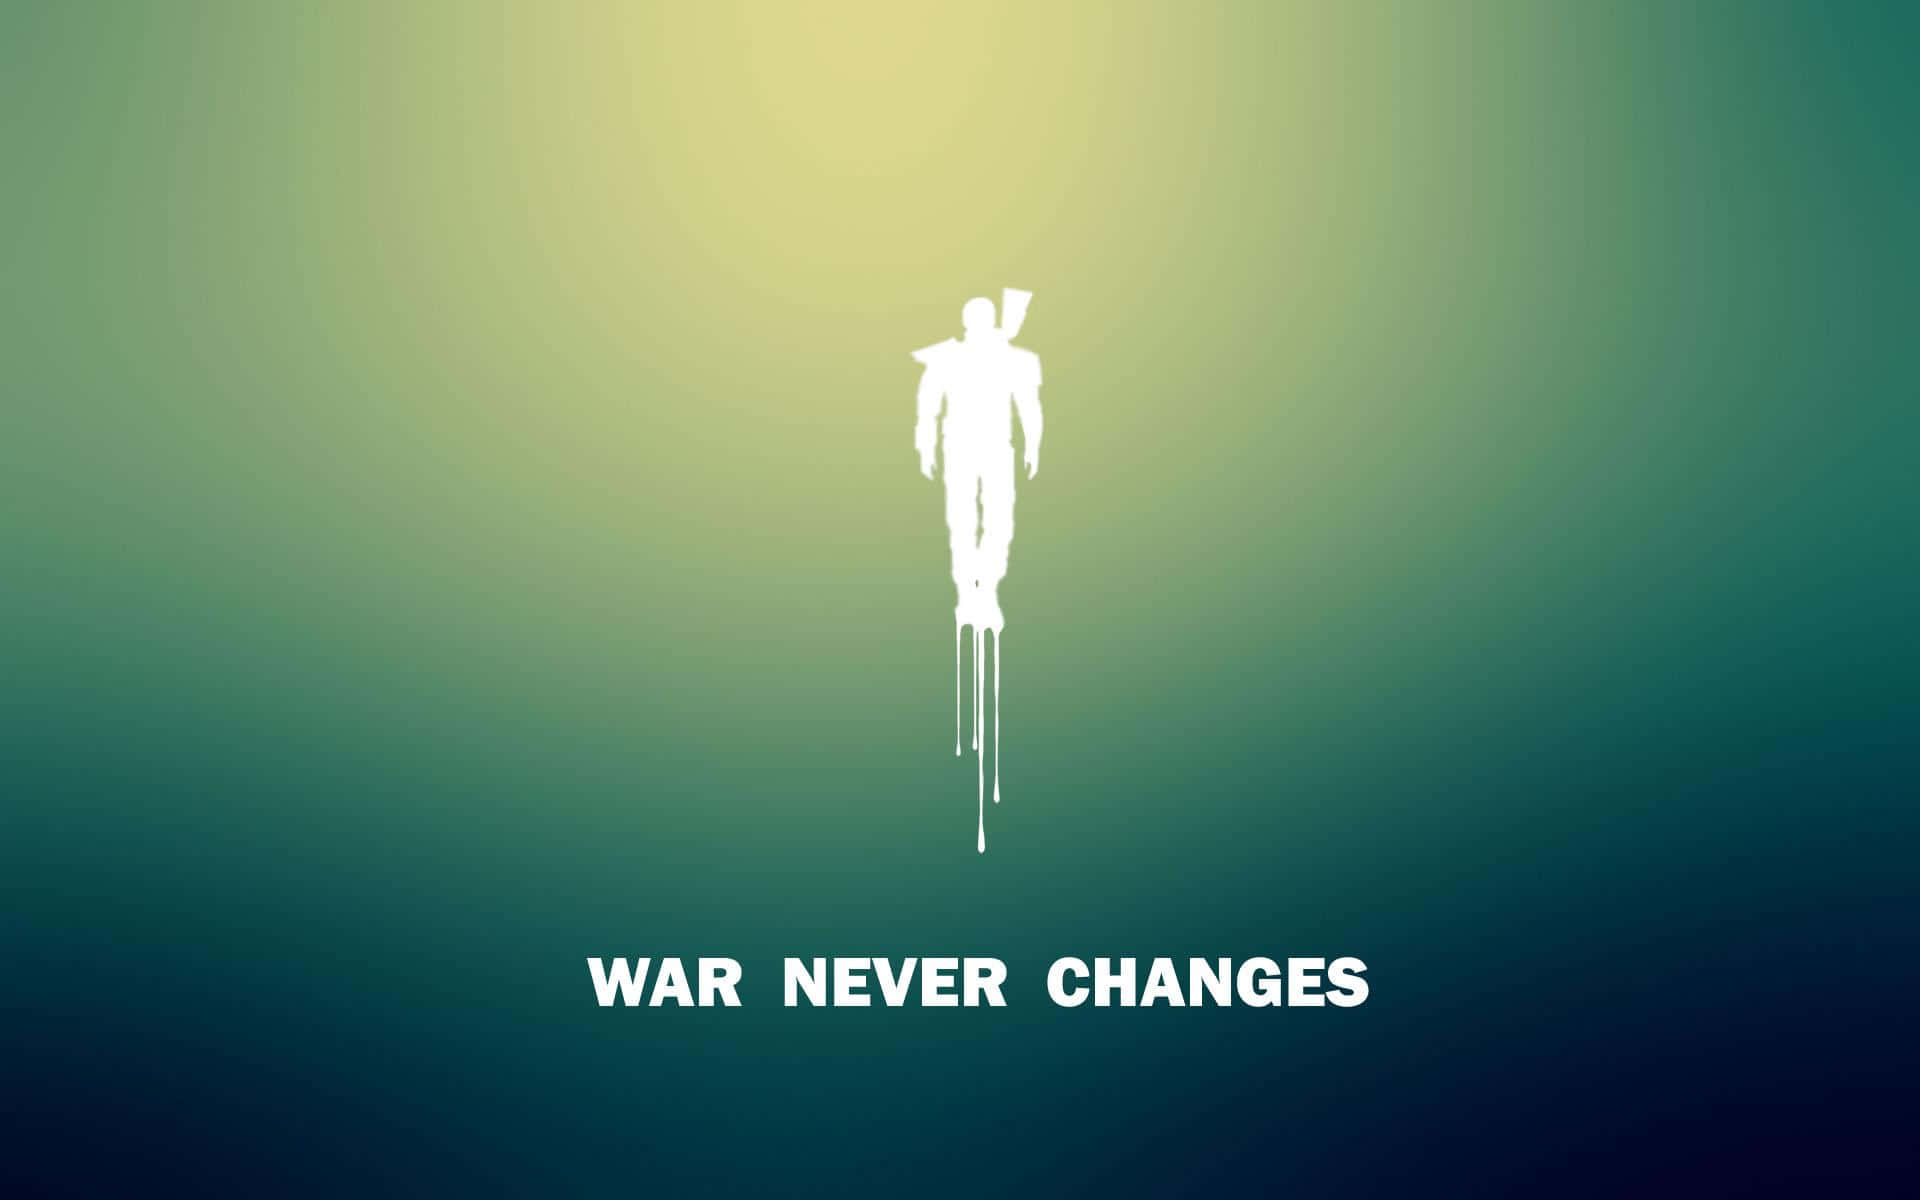 Krig ændrer aldrig - et minimalistisk plakat fra Fallout-franchisen Wallpaper